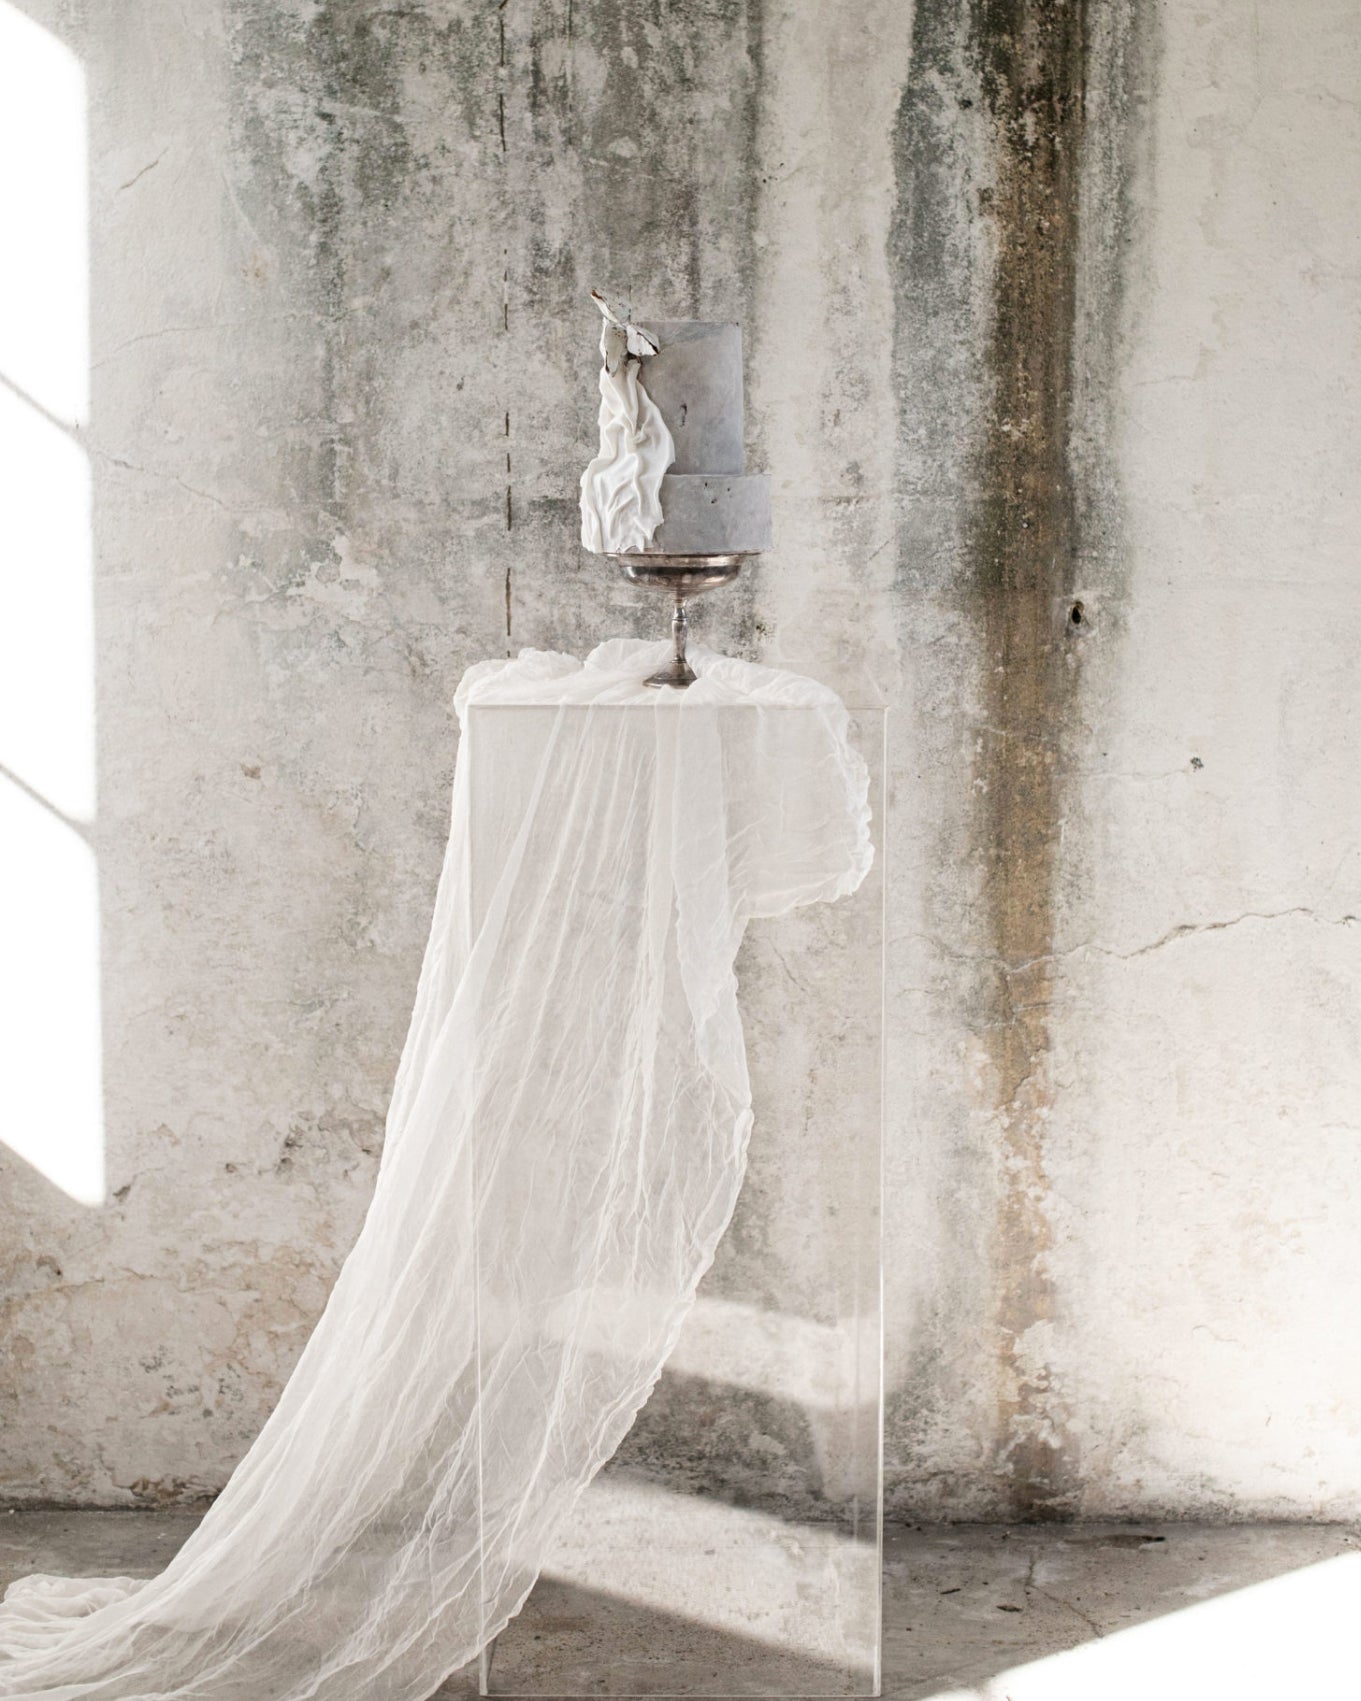 white sheer silk draping from a pedestal display with wedding cake by Marina Machado 